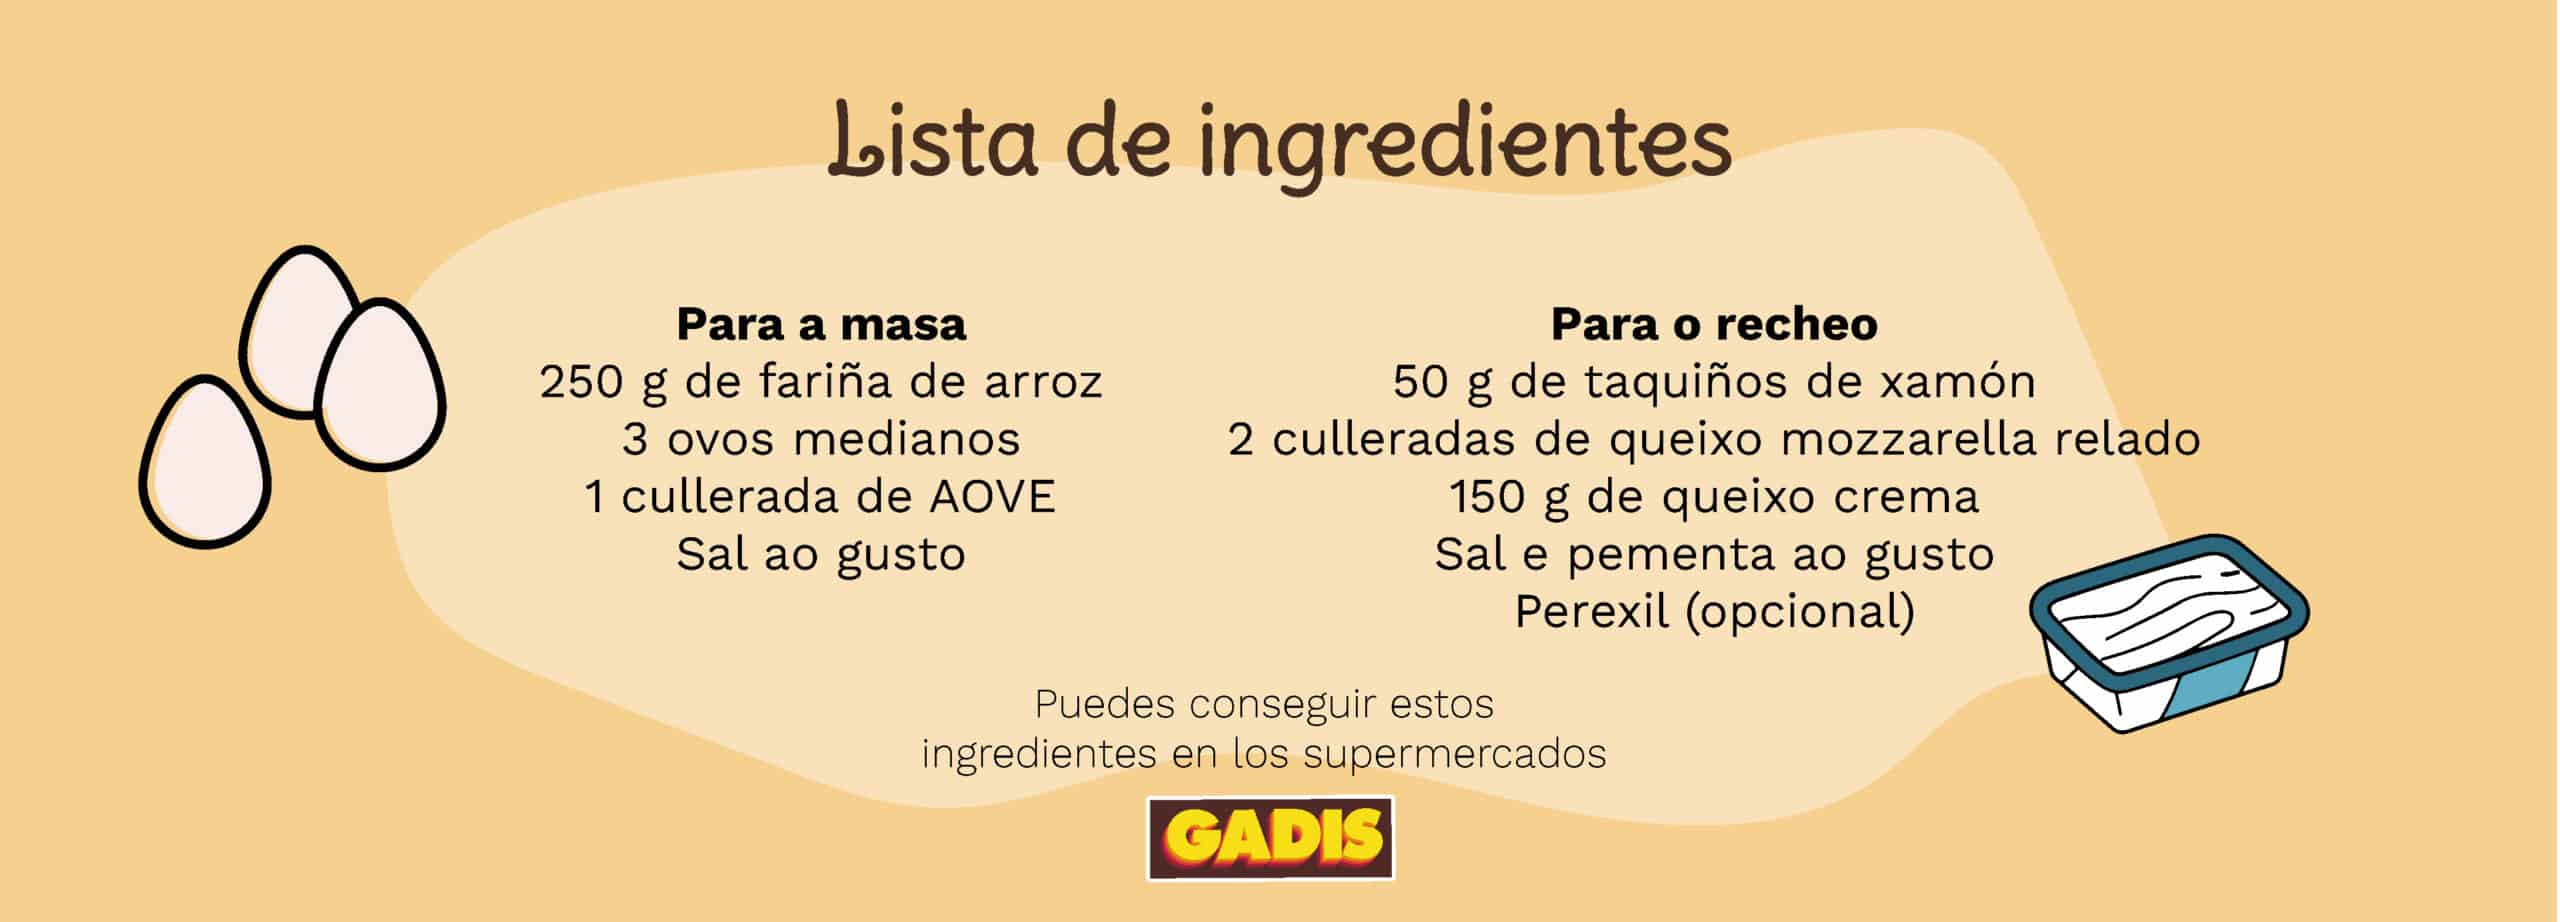 ingredientes receita de ravioli sen glute